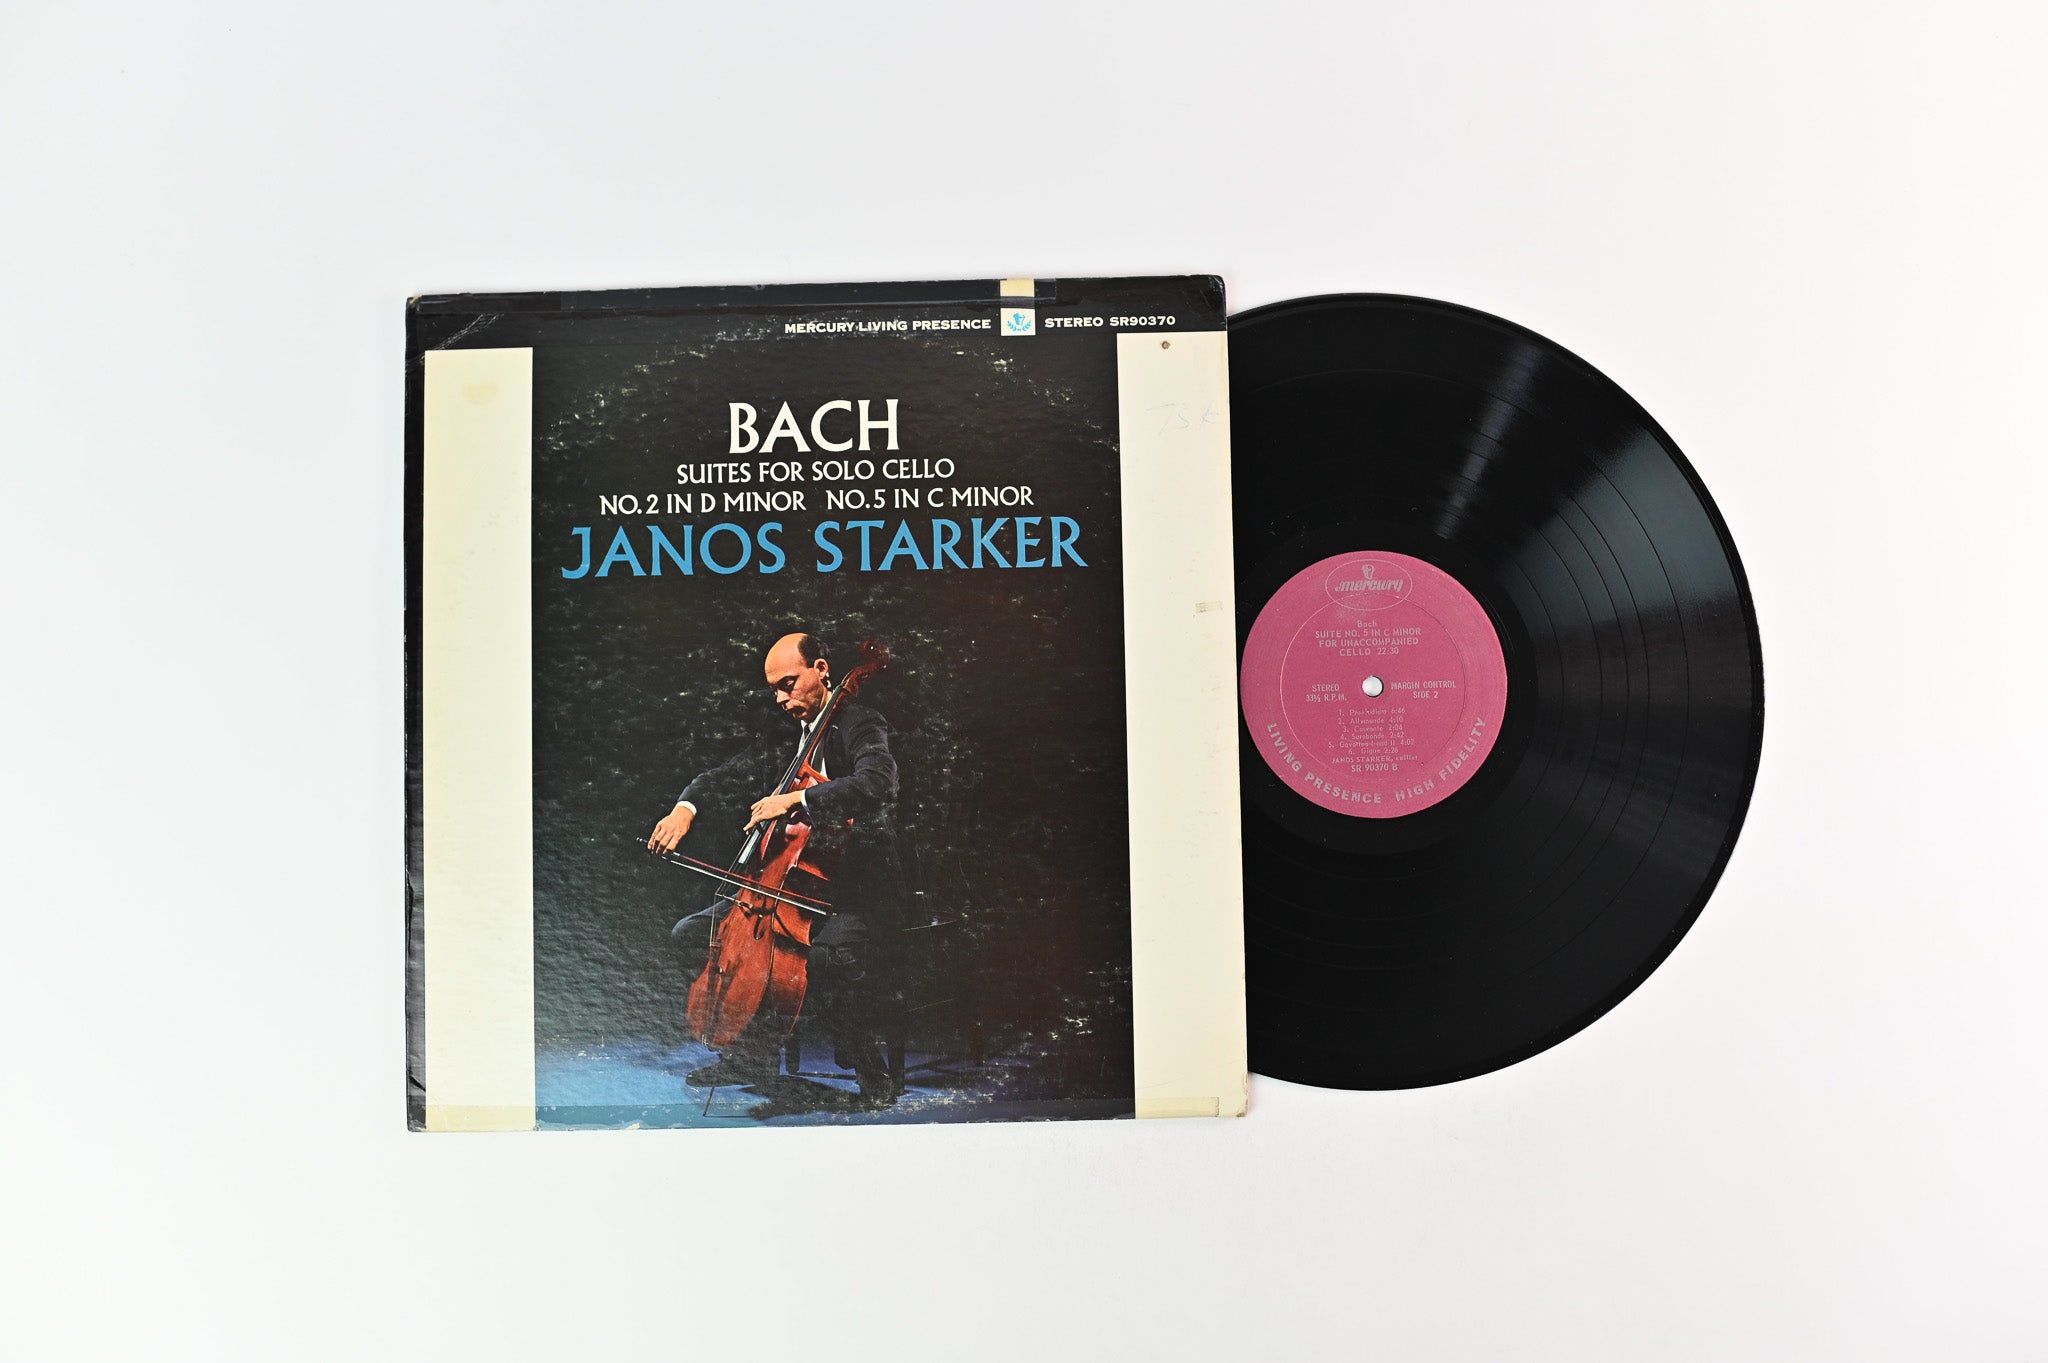 Janos Starker - Bach Suites For Solo Cello No.2 In D Minor No.5 In C Minor on Mercury SR90370 Stereo